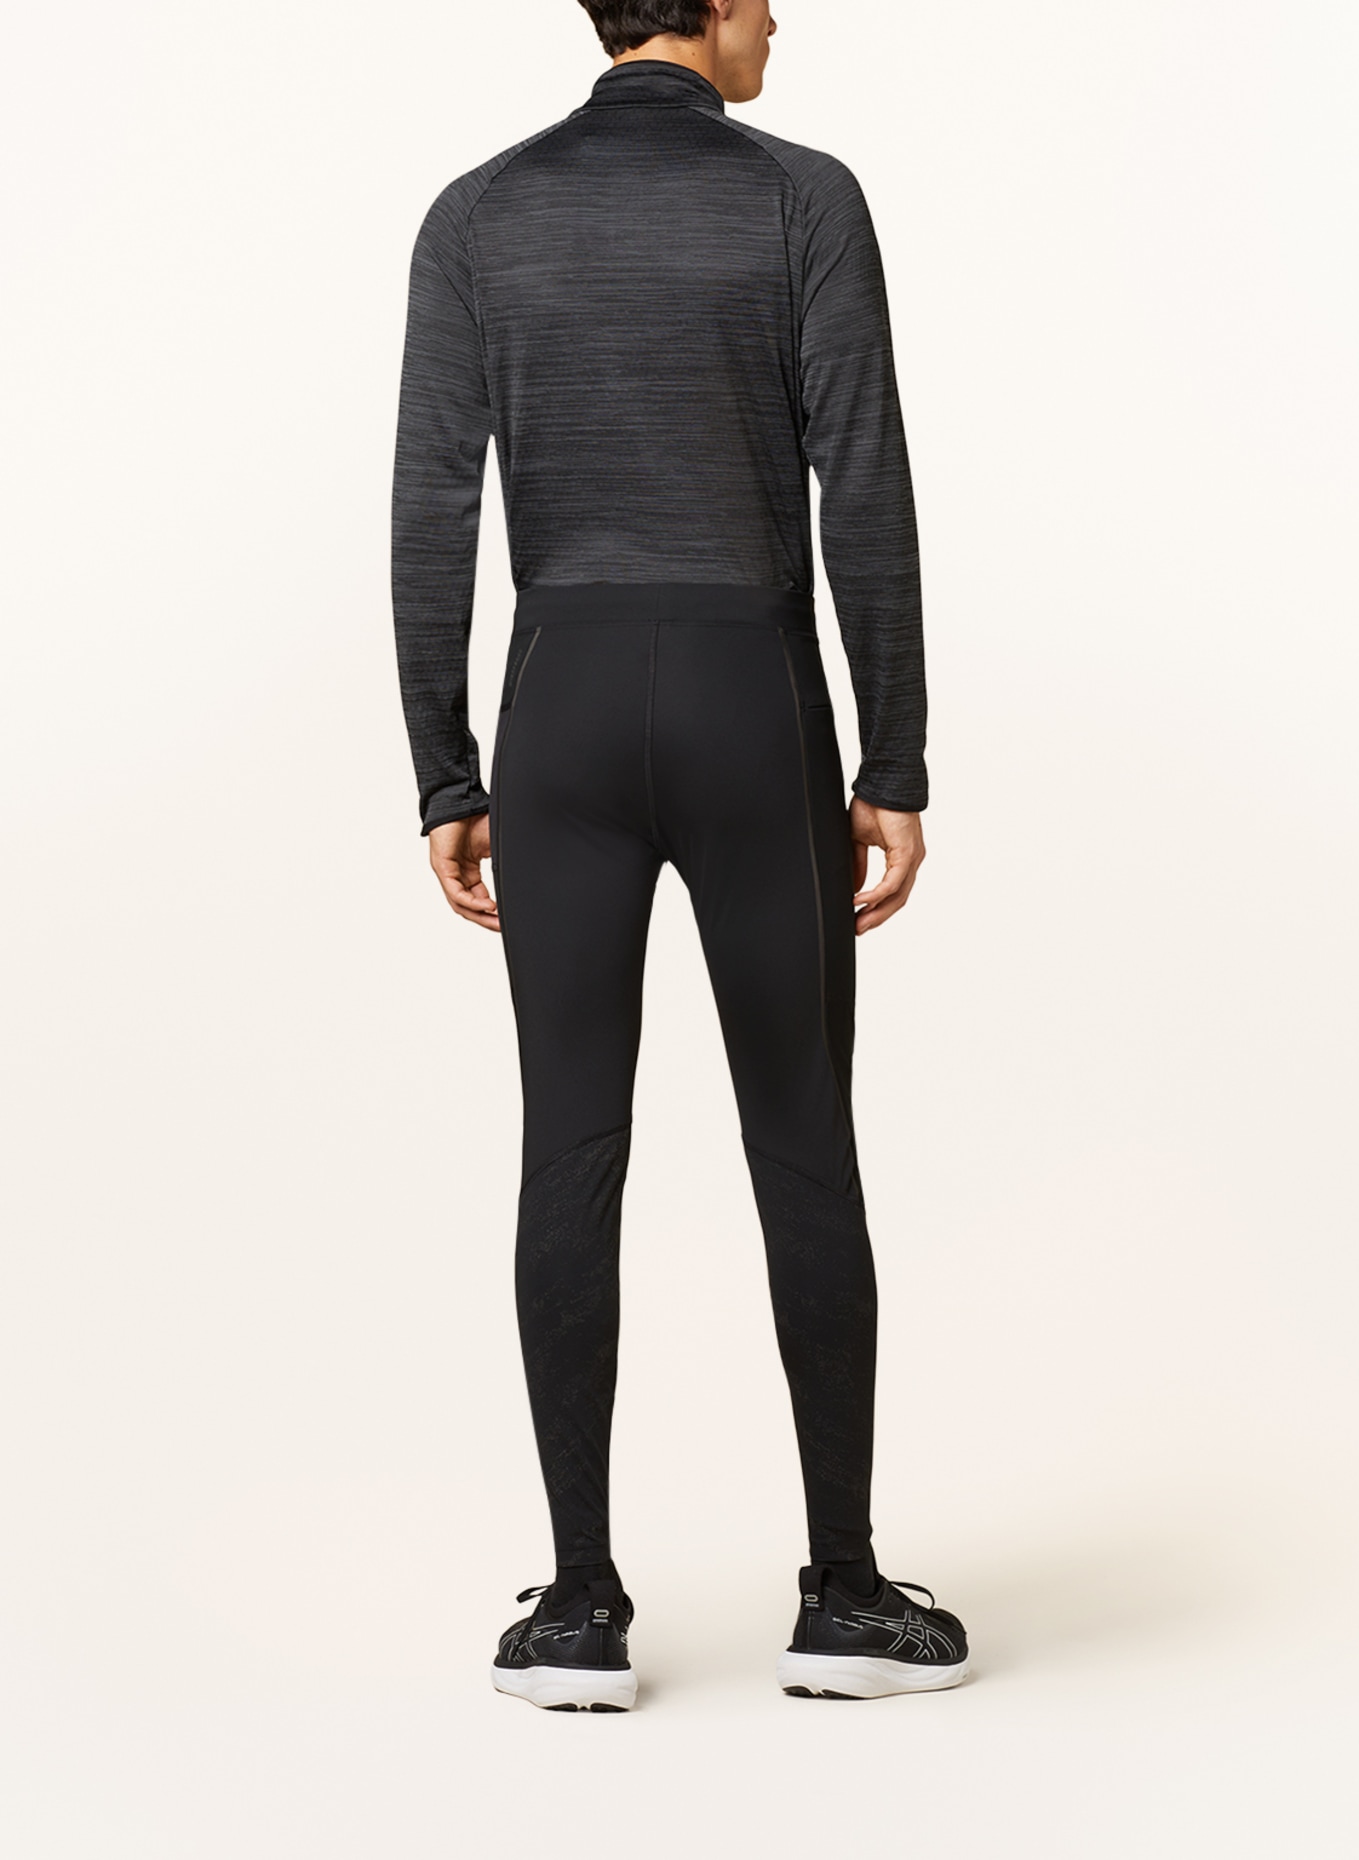 Odlo Zeroweight Warm Reflective Running Tights Men - black